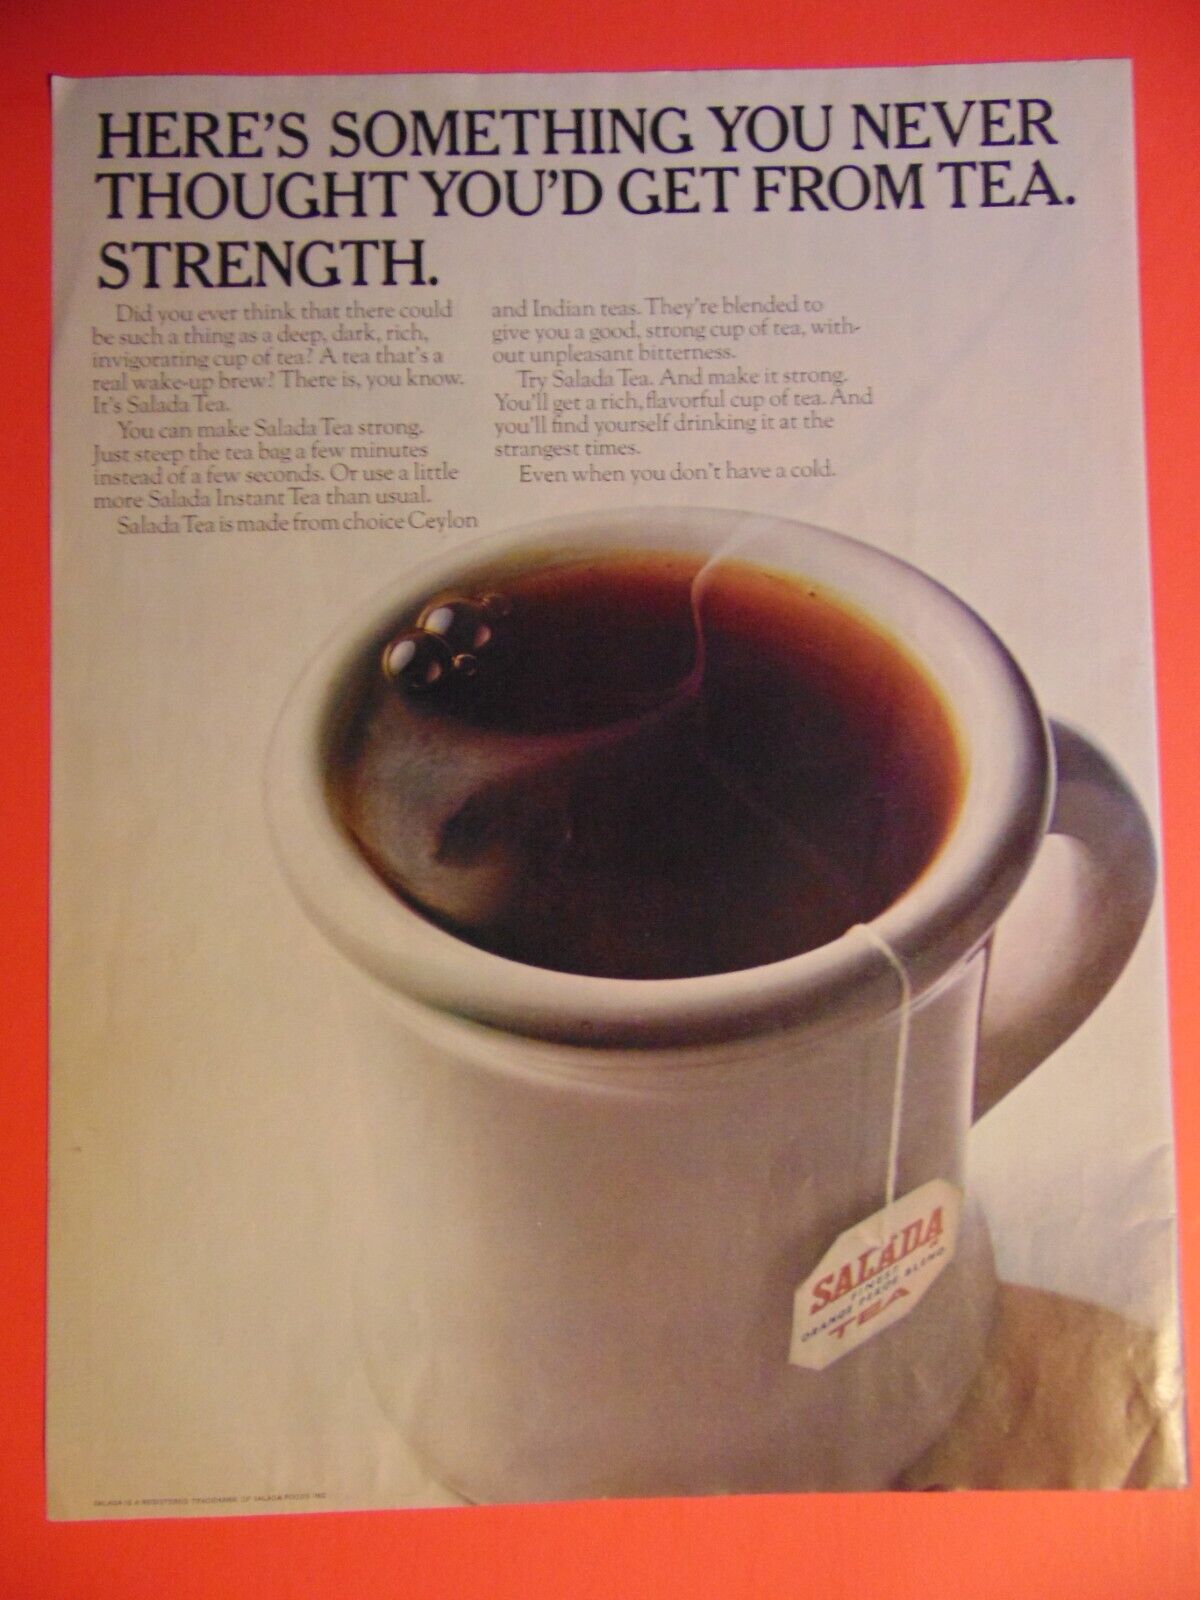 1964 MUG of SALADA TEA Get STRENGTH photo art print ad